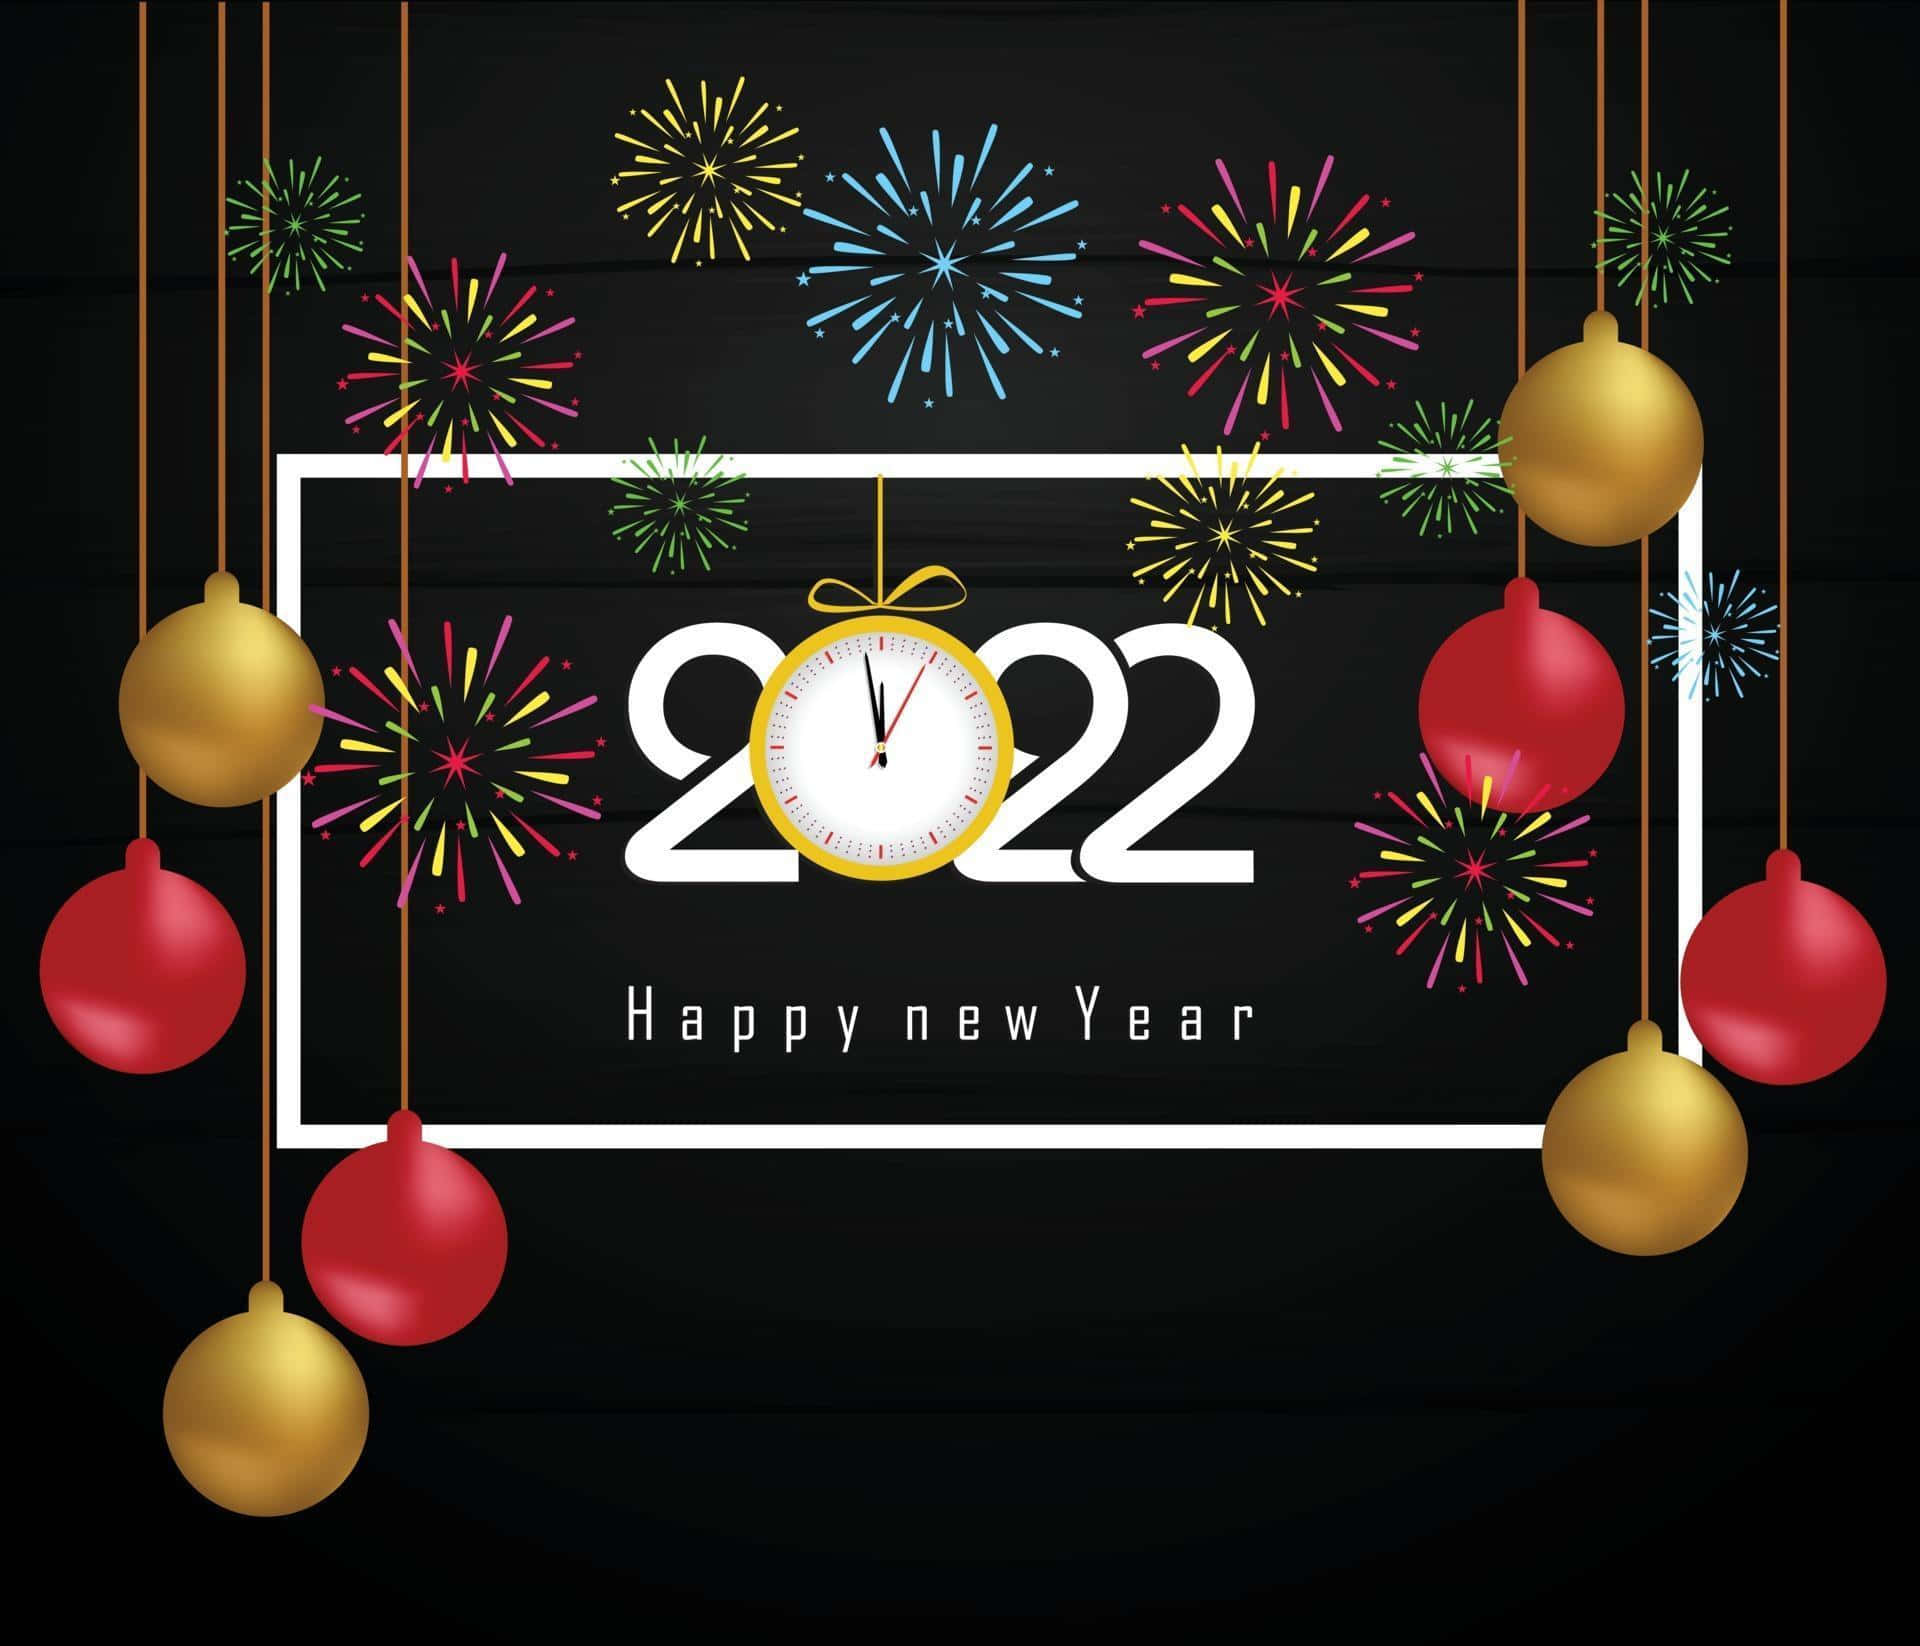 Ønskdig Et Godt Nytår 2022!